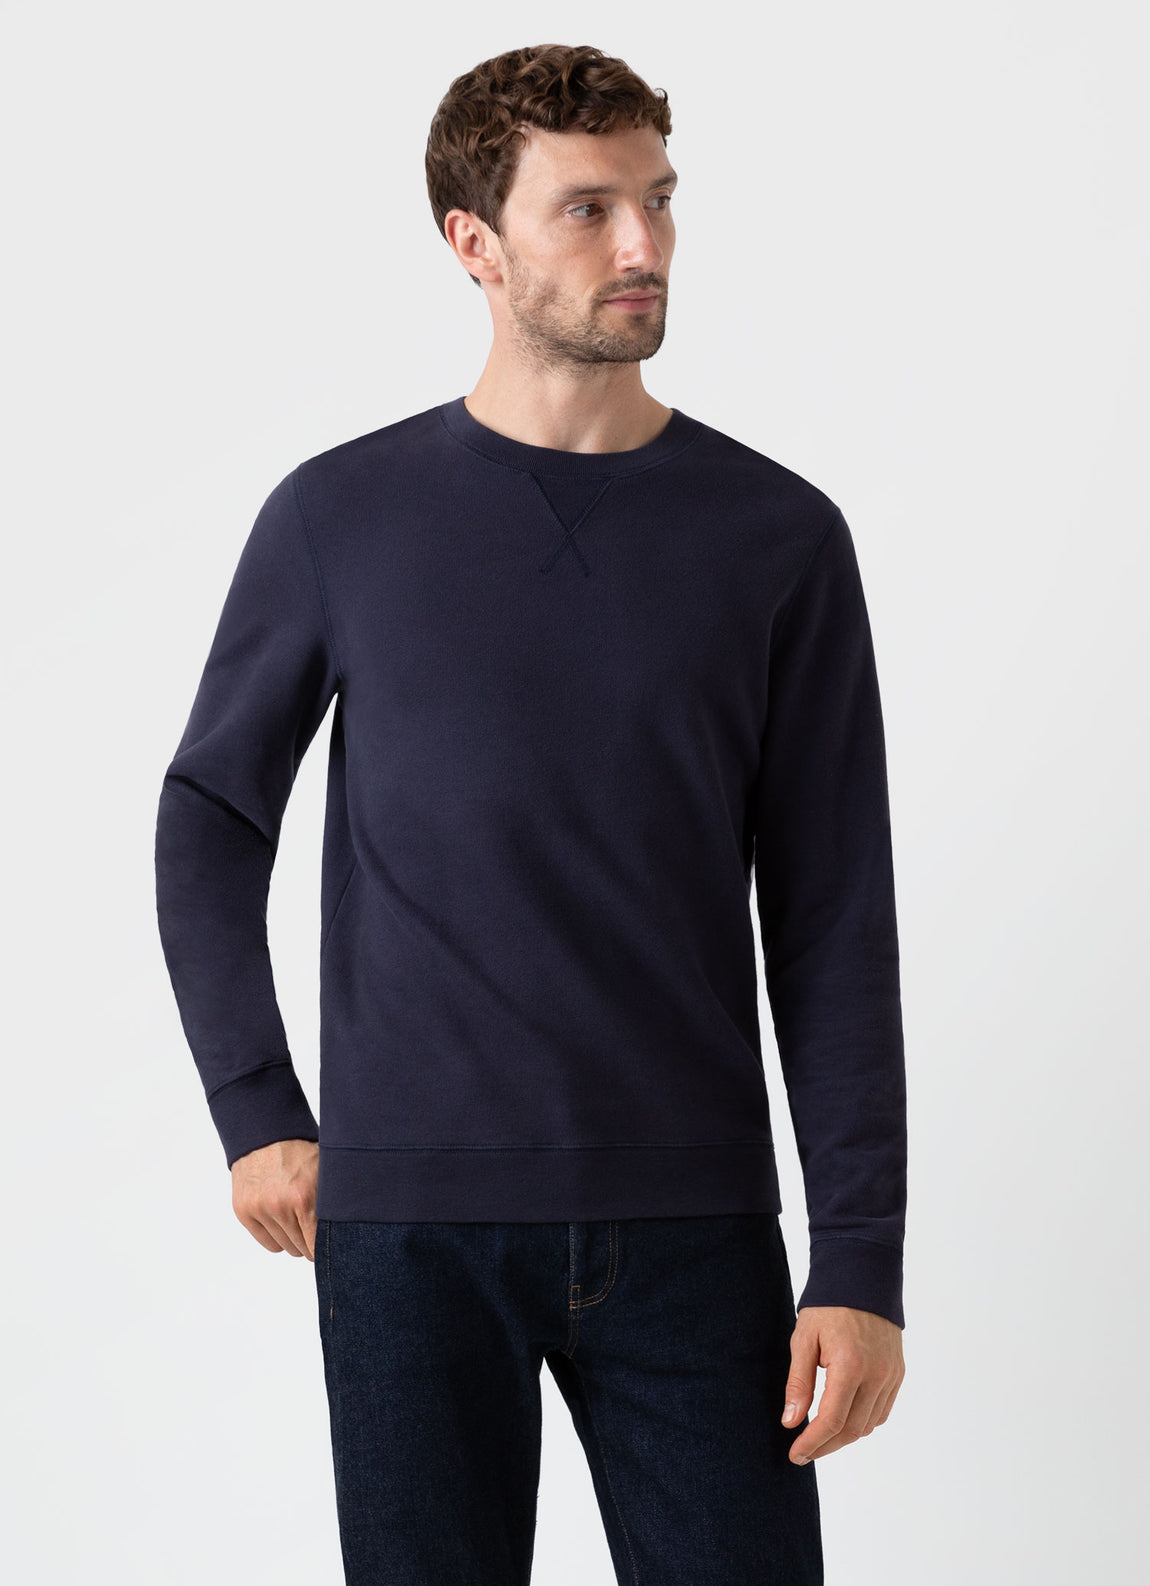 Men's Loopback Sweatshirt in Navy | Sunspel